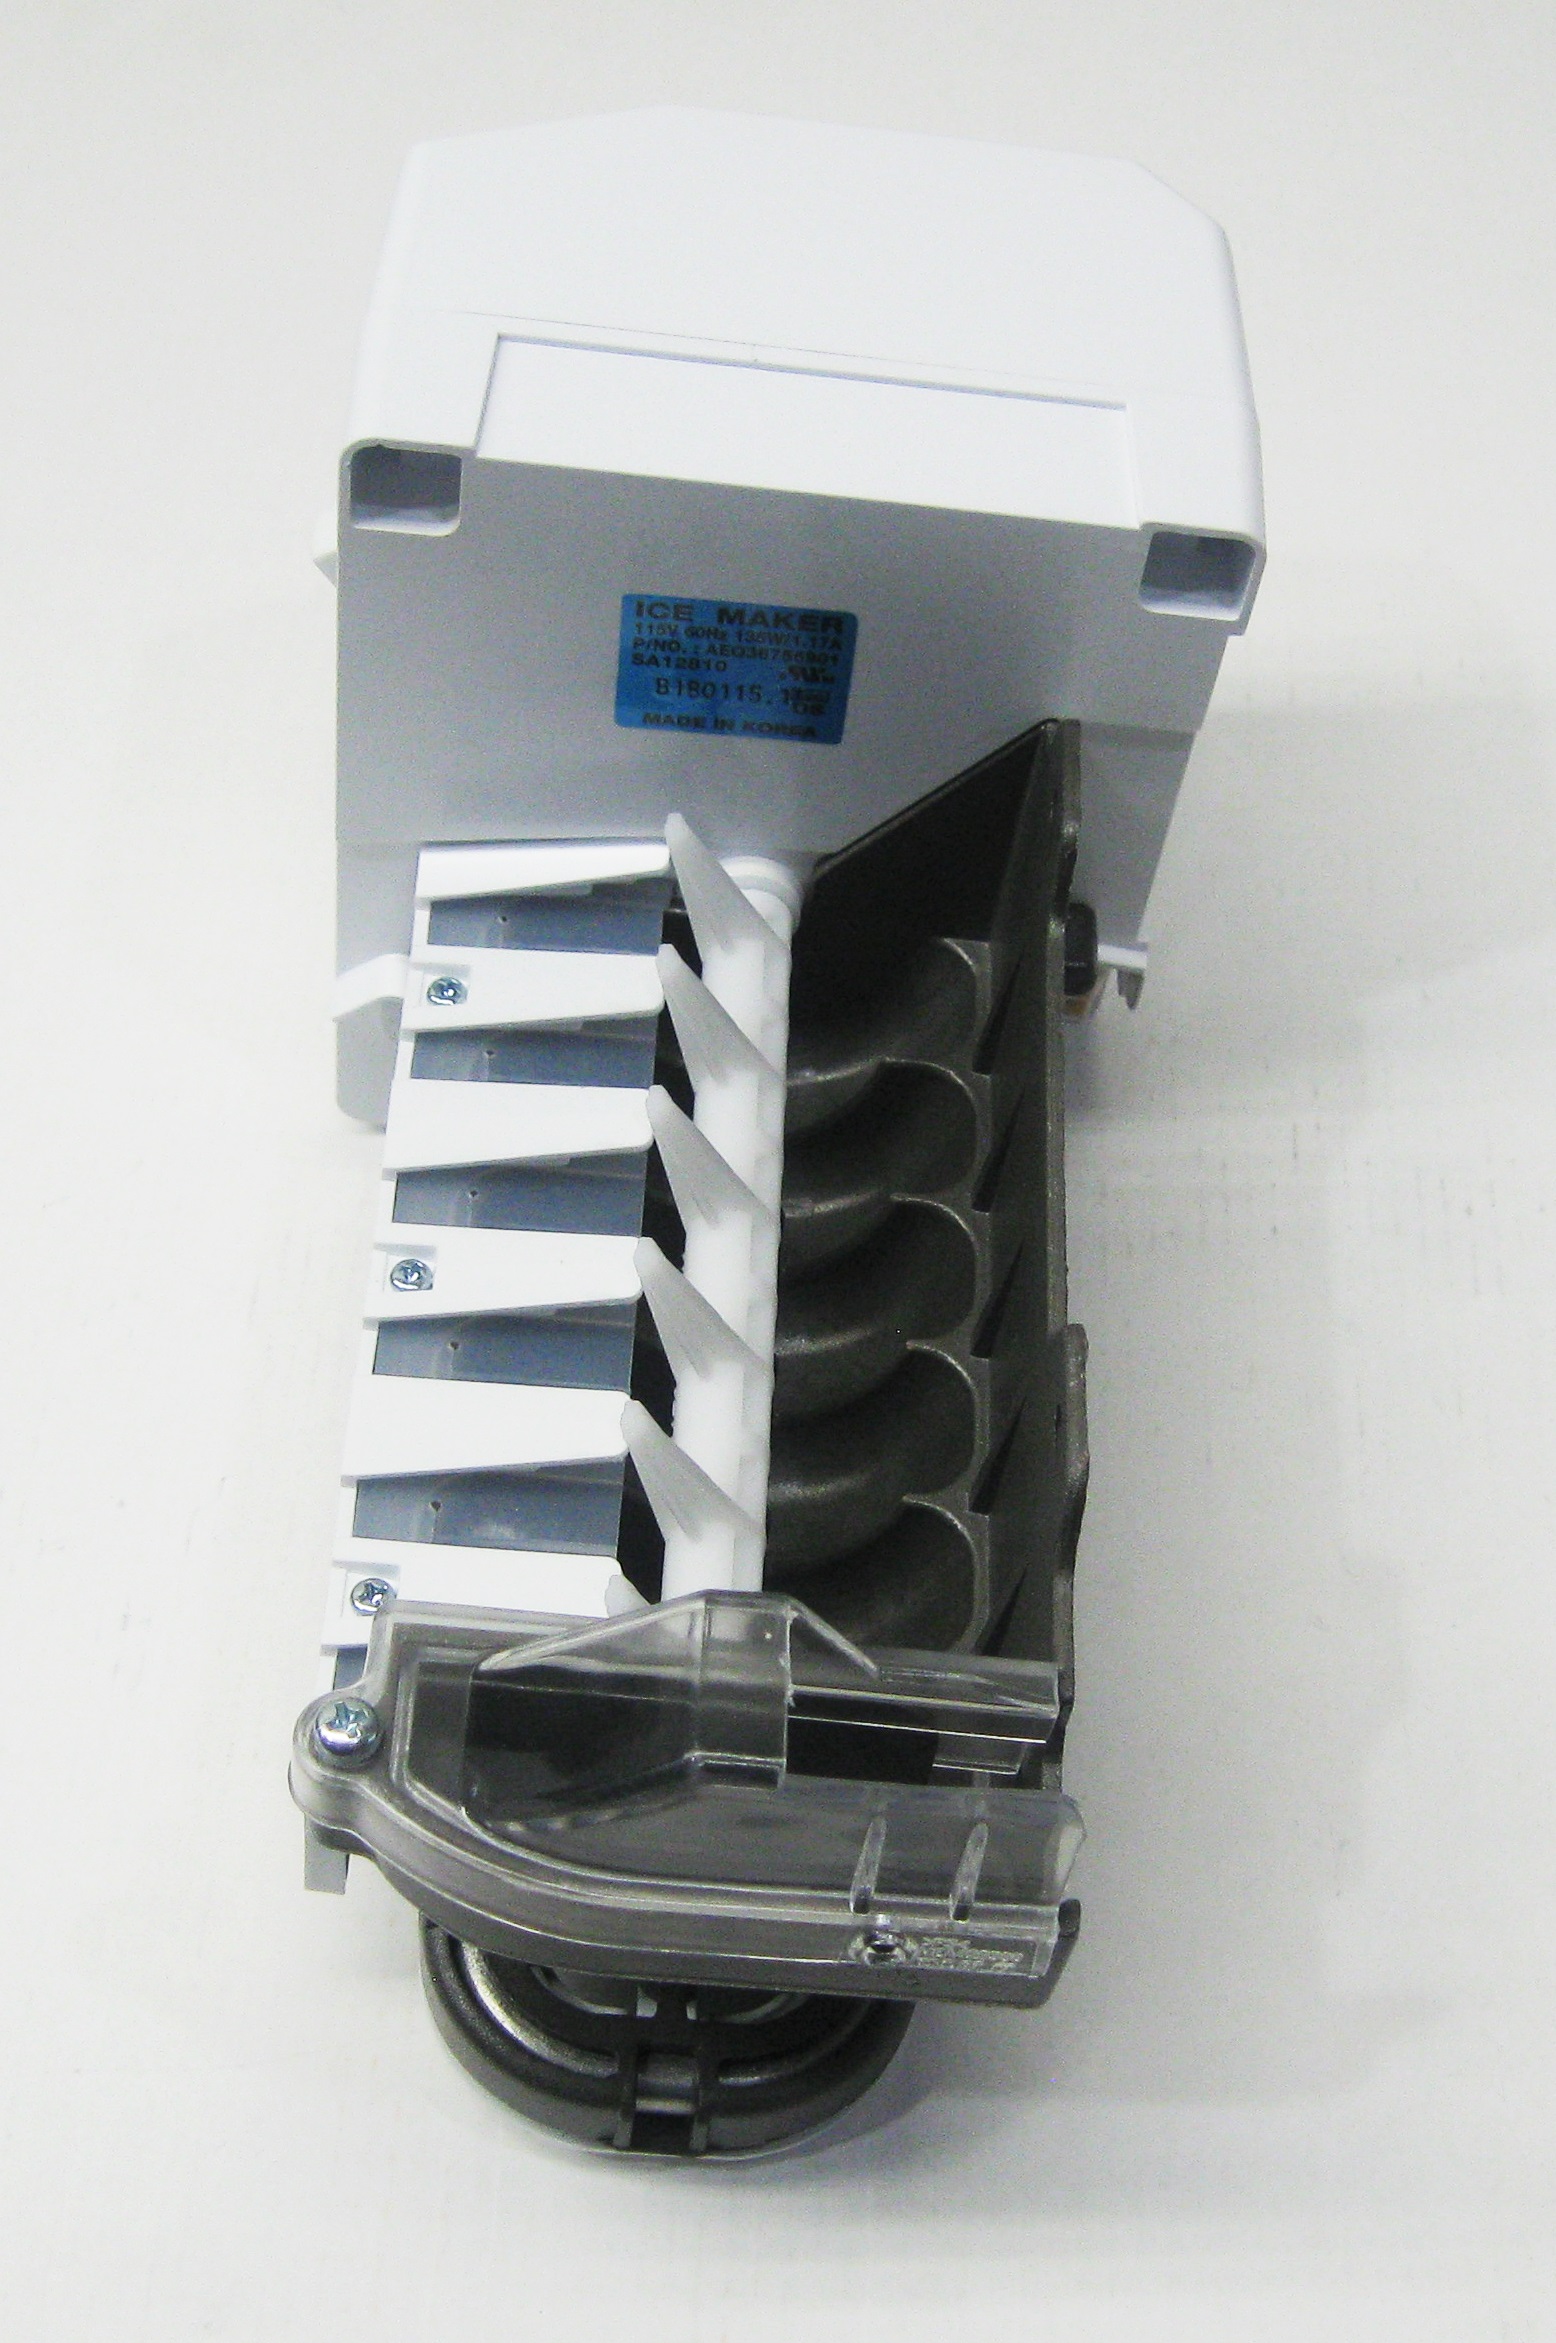 LG AEQ36756901 Ice Maker Assembly Refrigerator - image 3 of 5